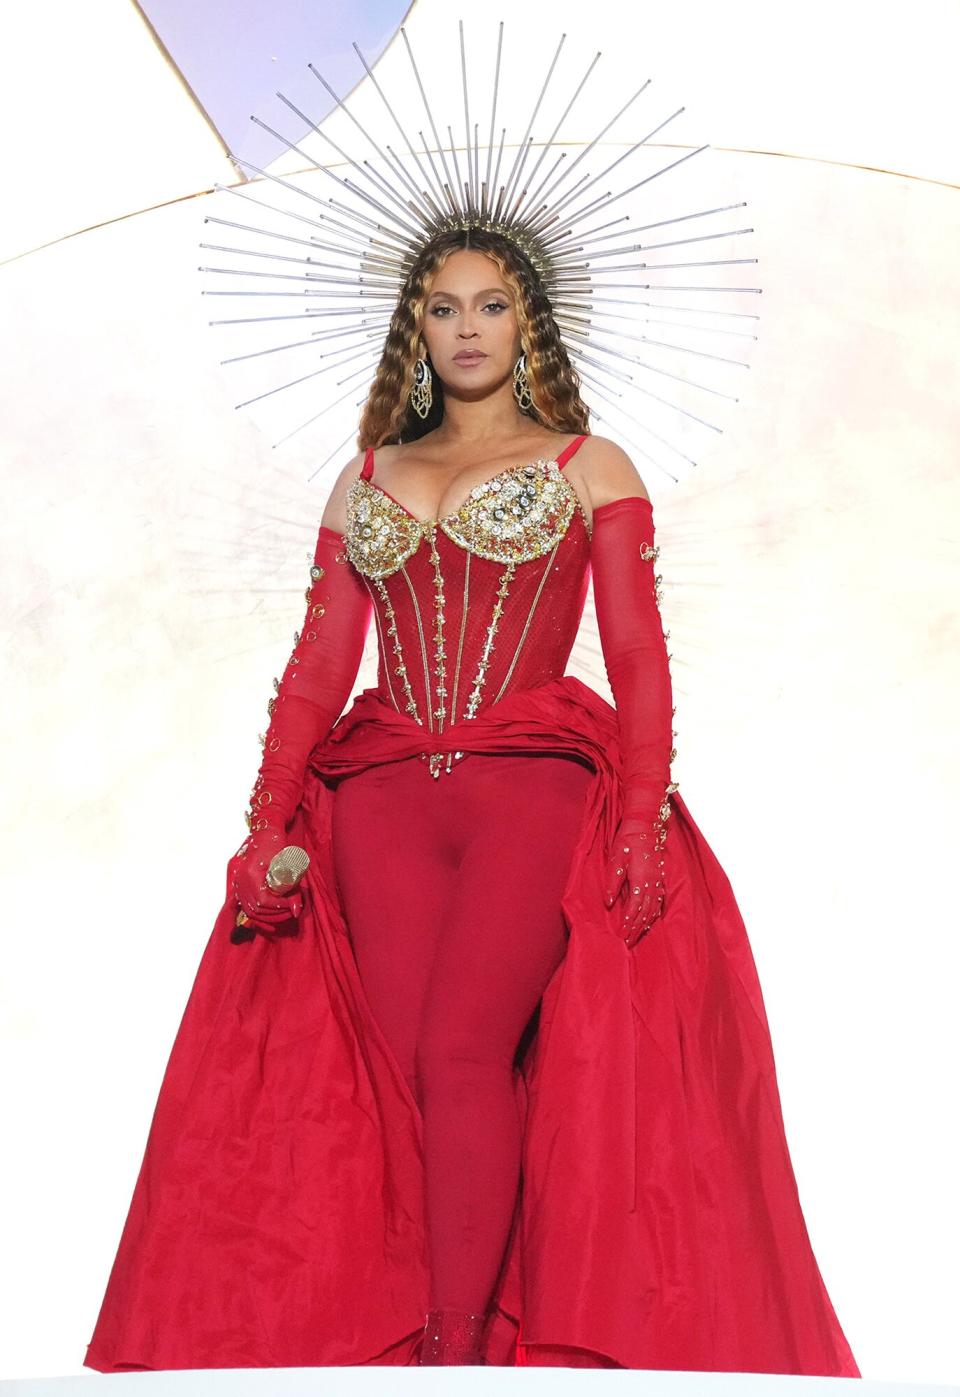 Beyoncé performs on stage headlining the Grand Reveal of Dubai's newest luxury hotel, Atlantis The Royal on January 21, 2023 in Dubai, United Arab Emirates